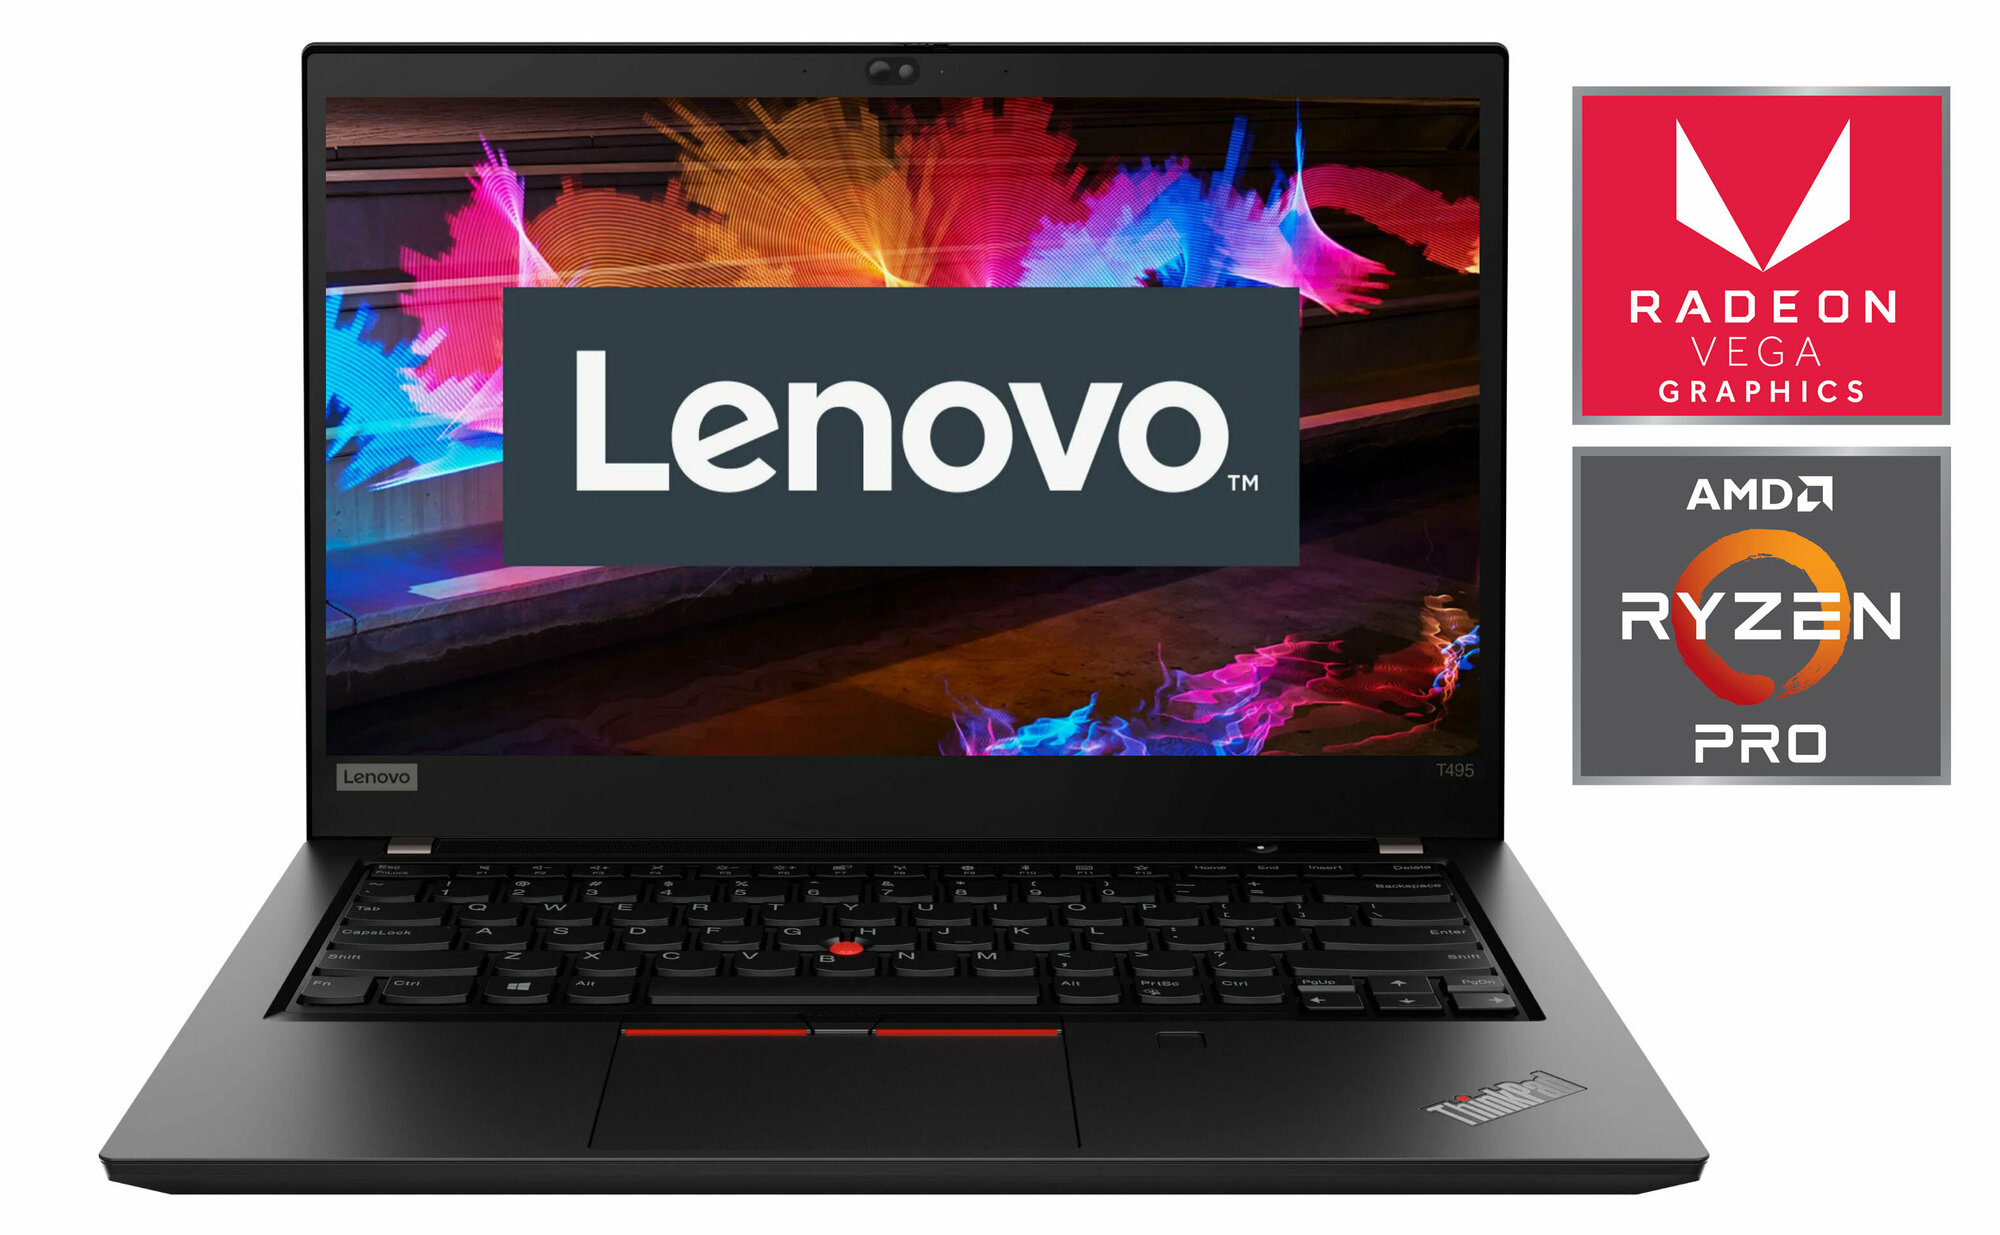 Ноутбук Lenovo THINKPAD T495 AMD Ryzen 7 PRO 3700U 2.3 ГГц, Память 16 ГБ, Диск 512 ГБ SSD, AMD Radeon Vega 10, Экран 14" (Сенсорный)